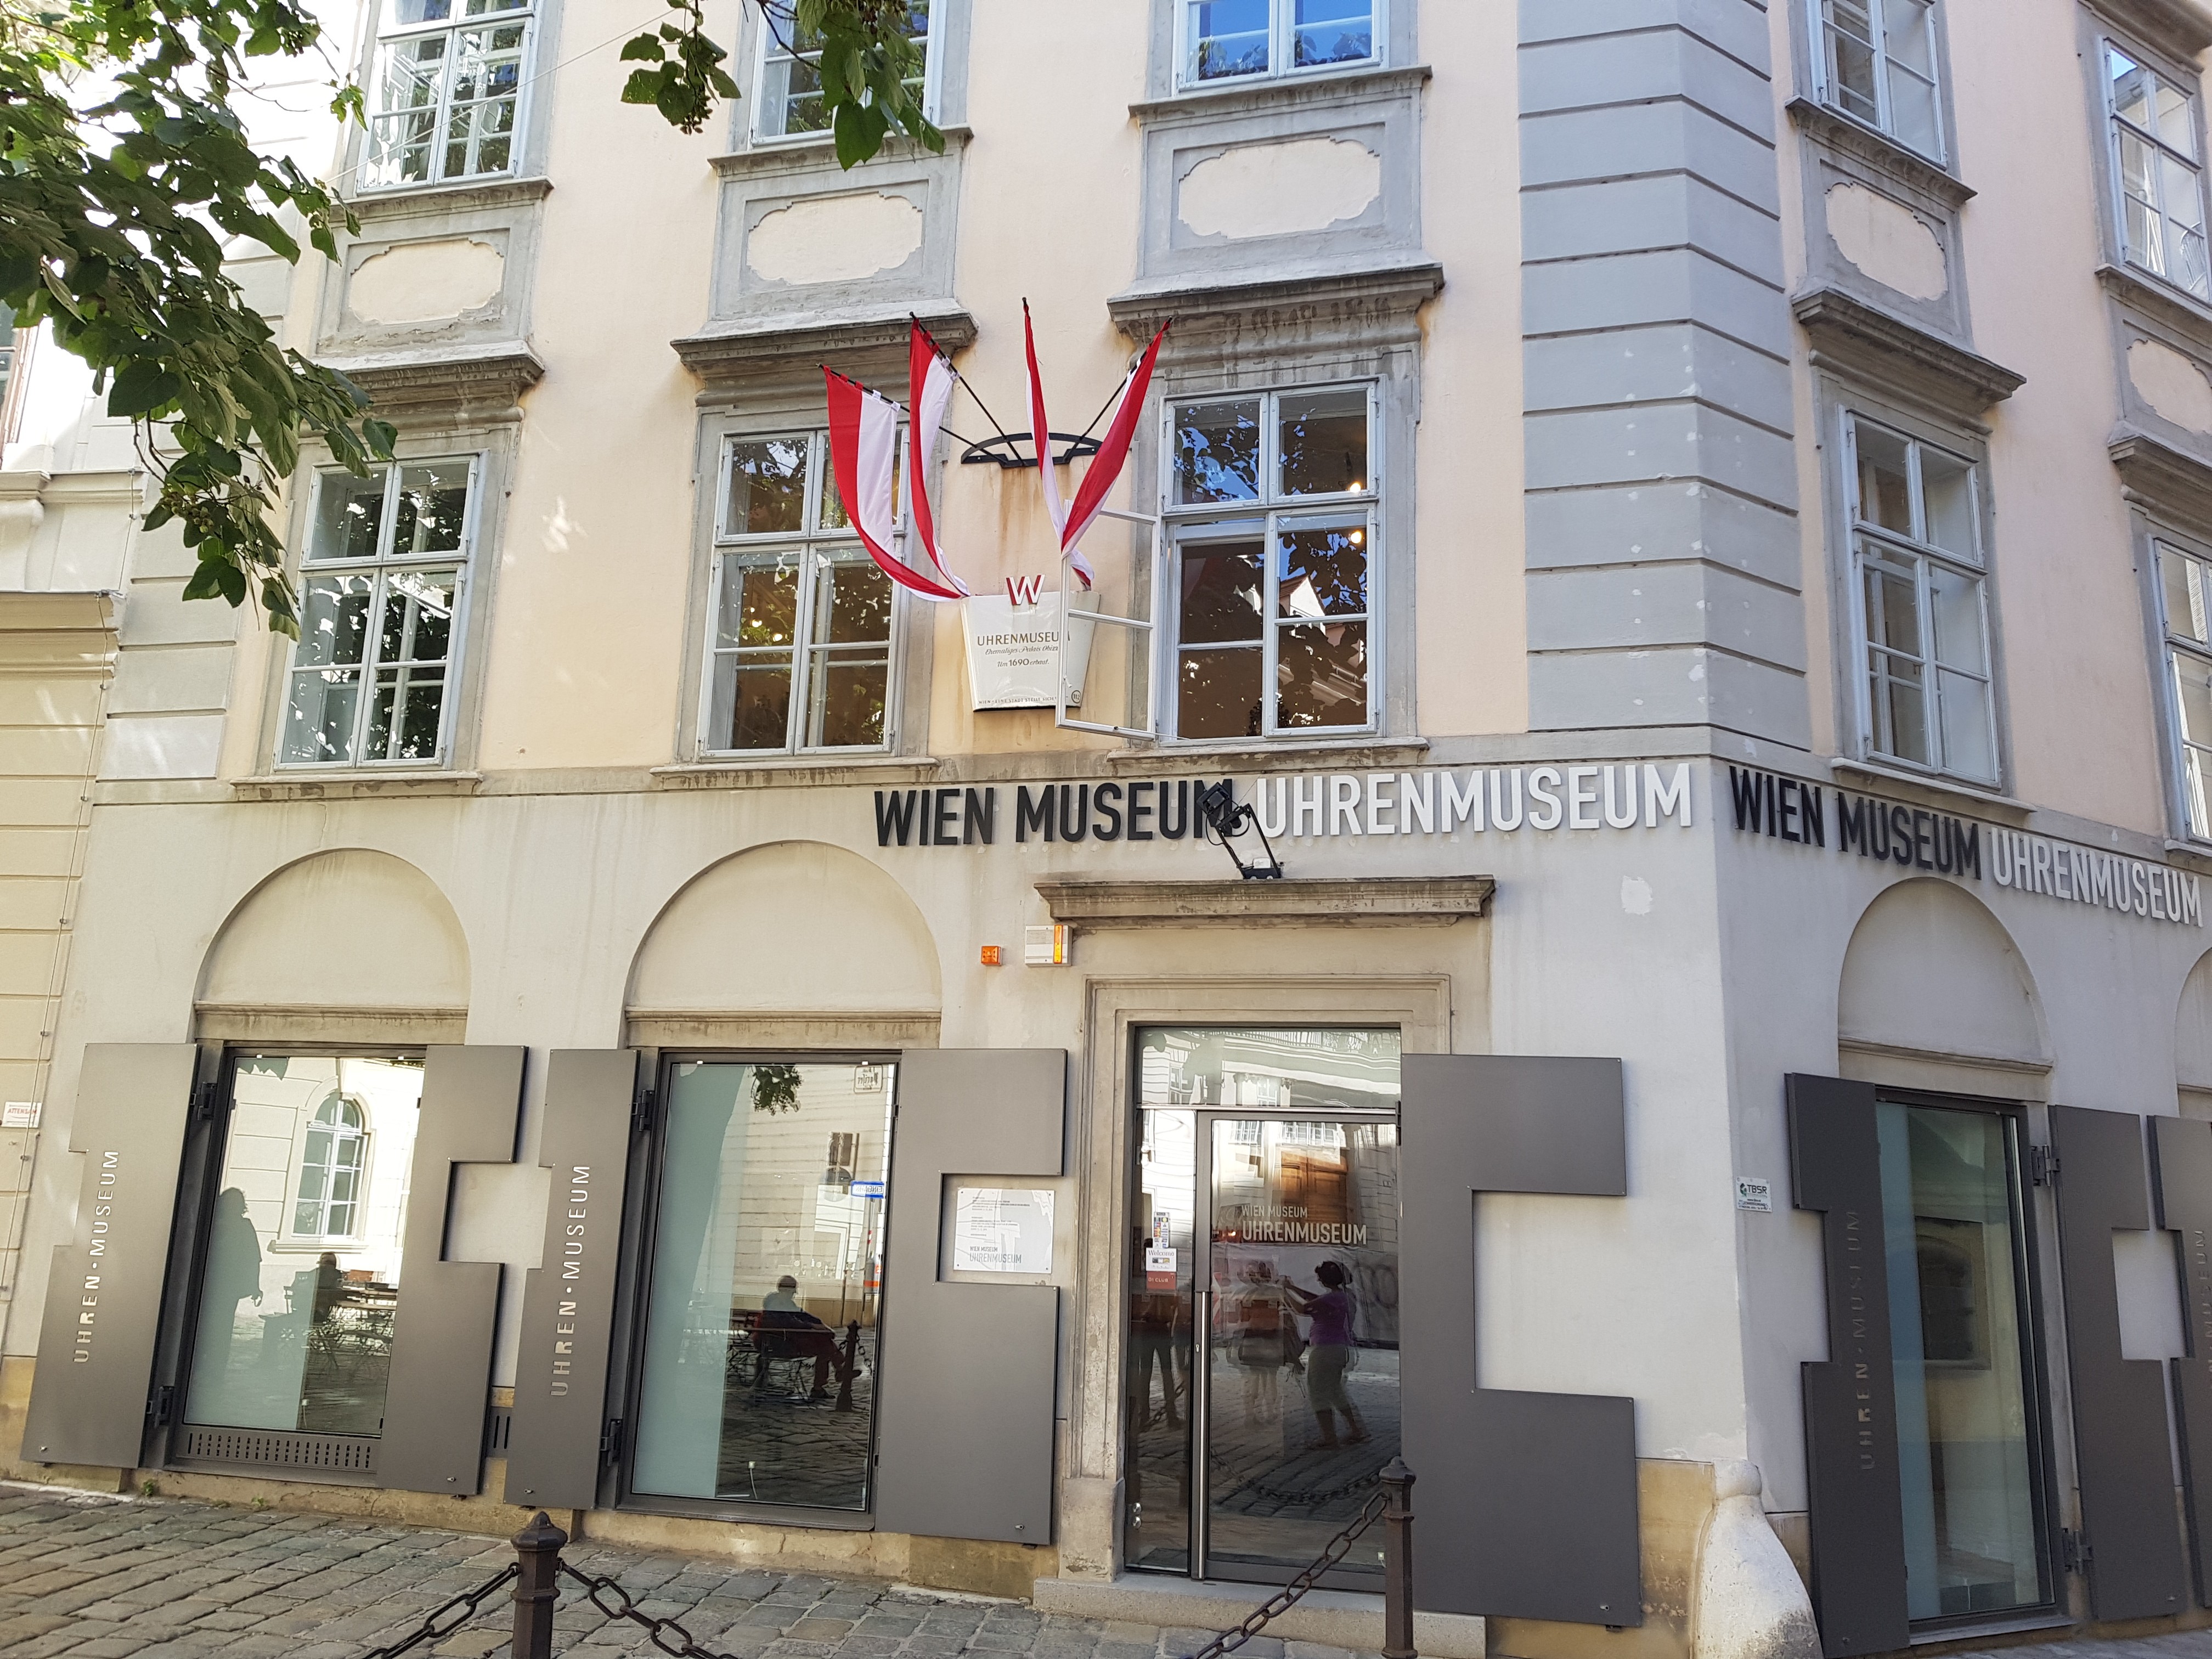 Uhrenmuseum Museum, Vienna: All Year